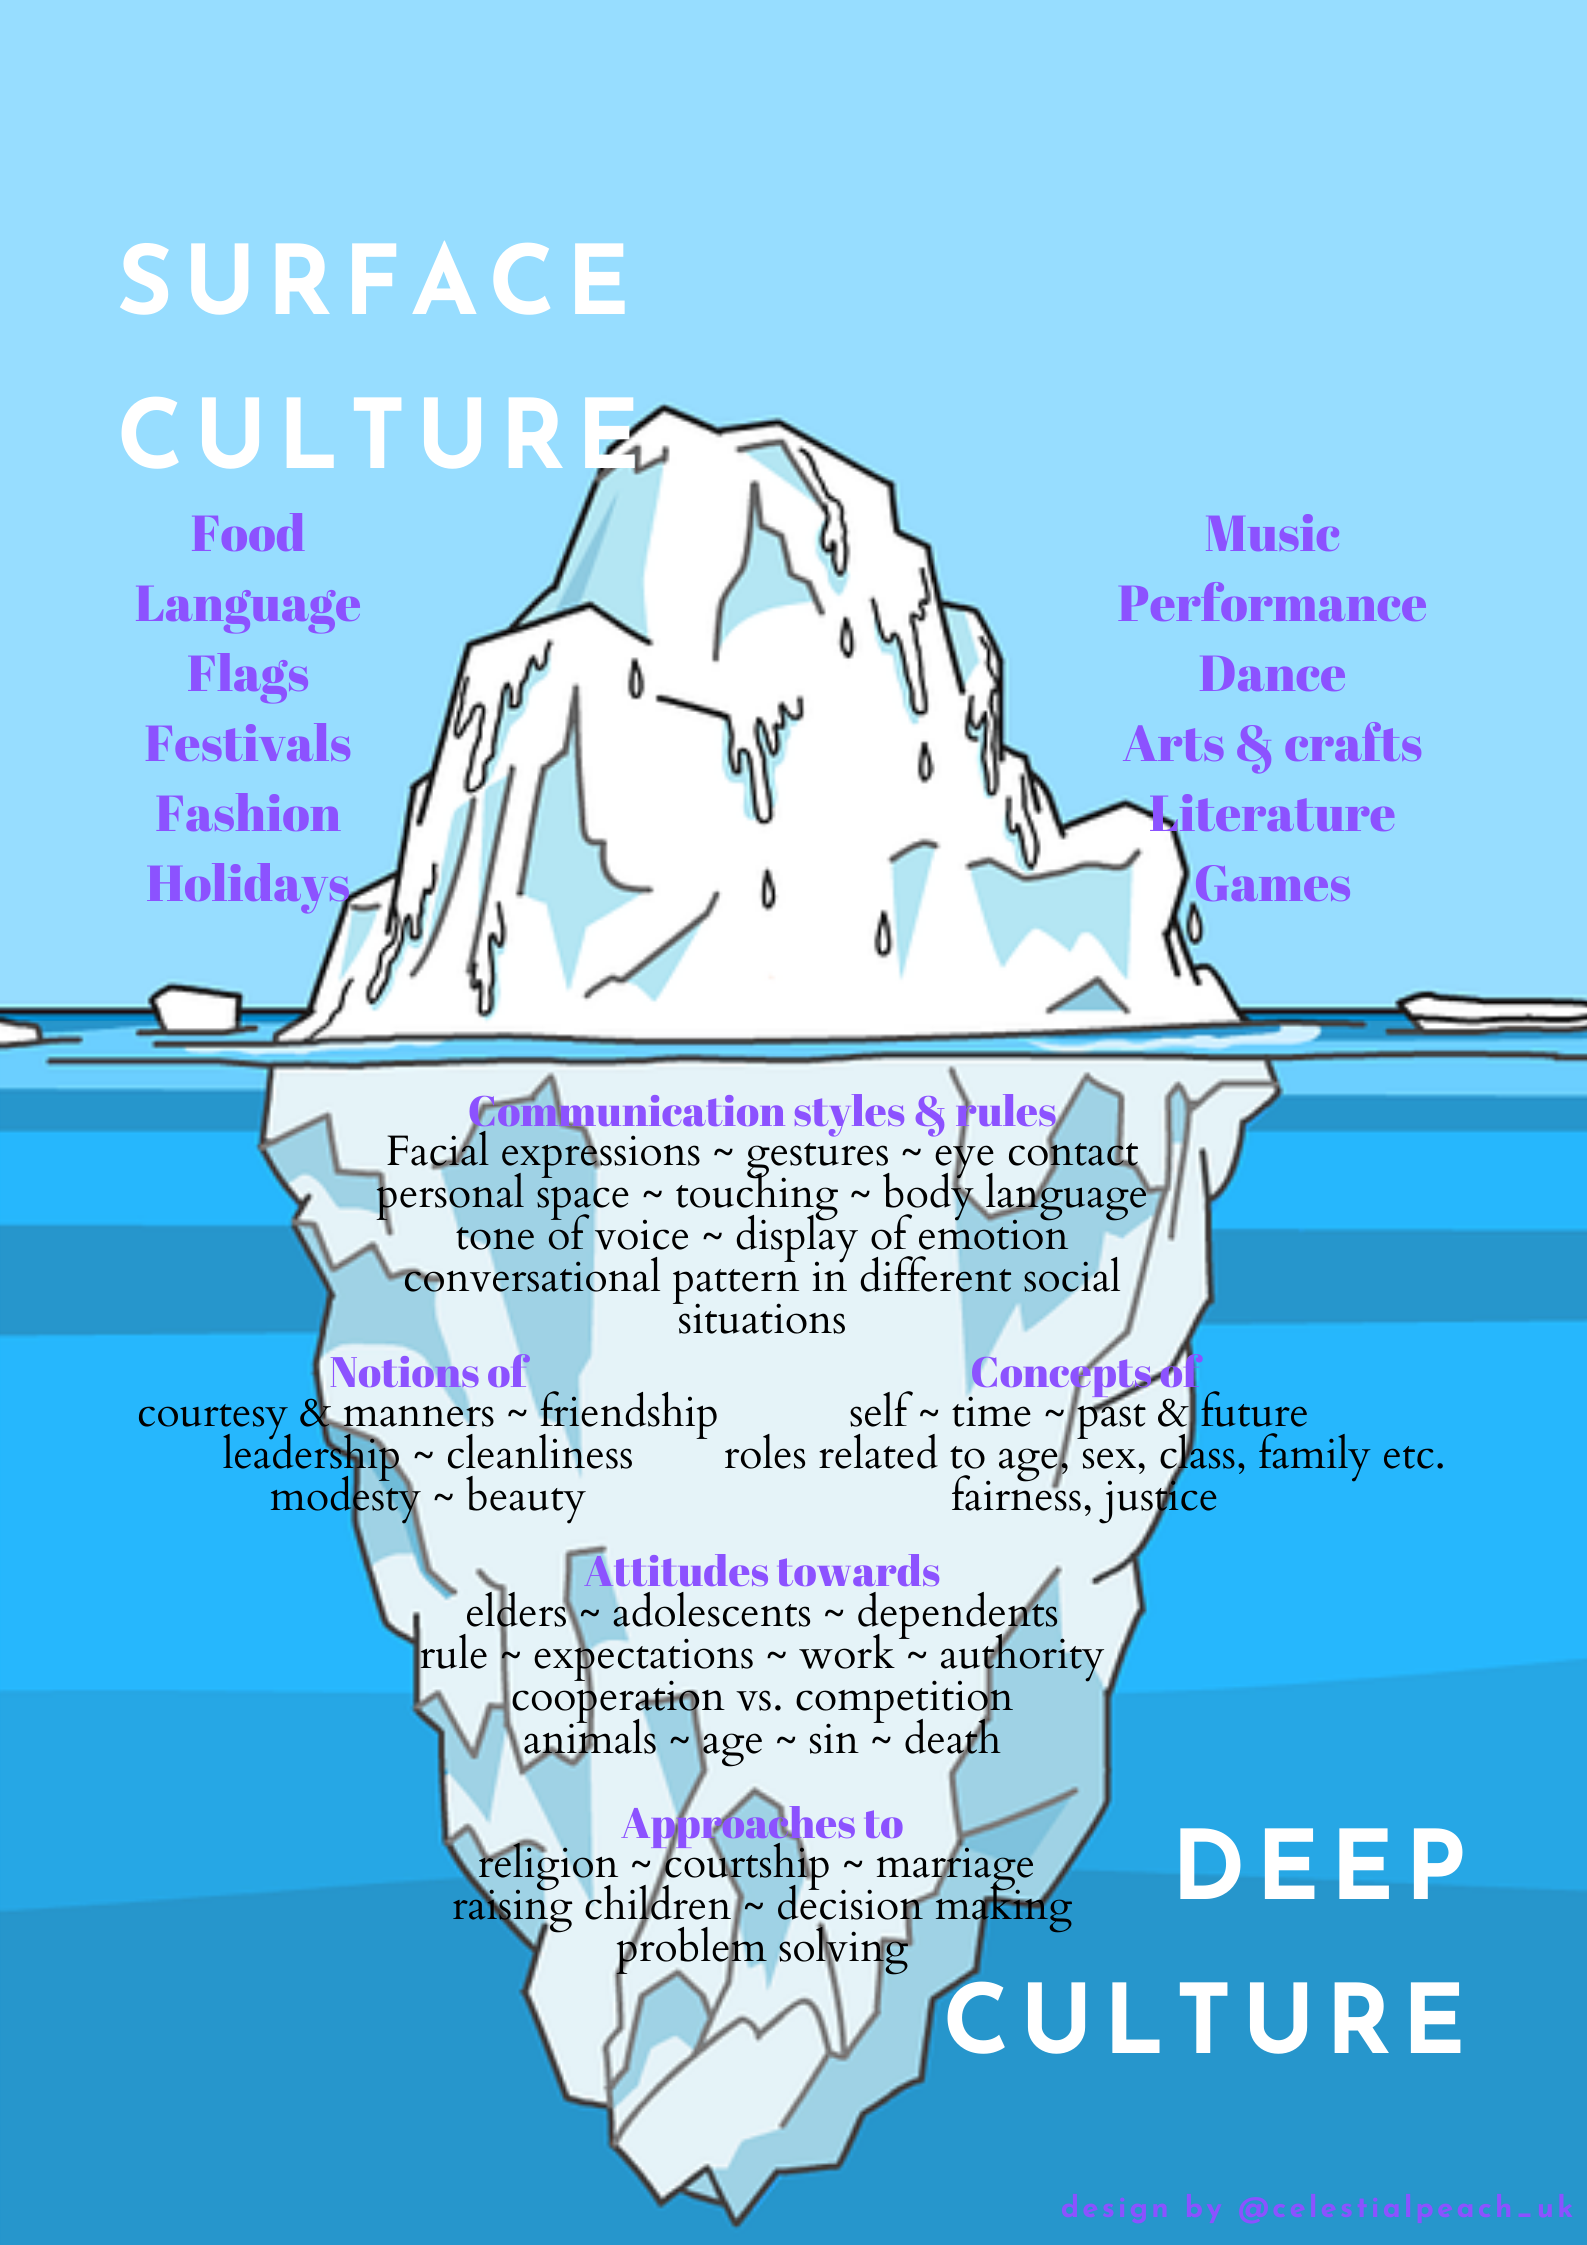 iceberg theory